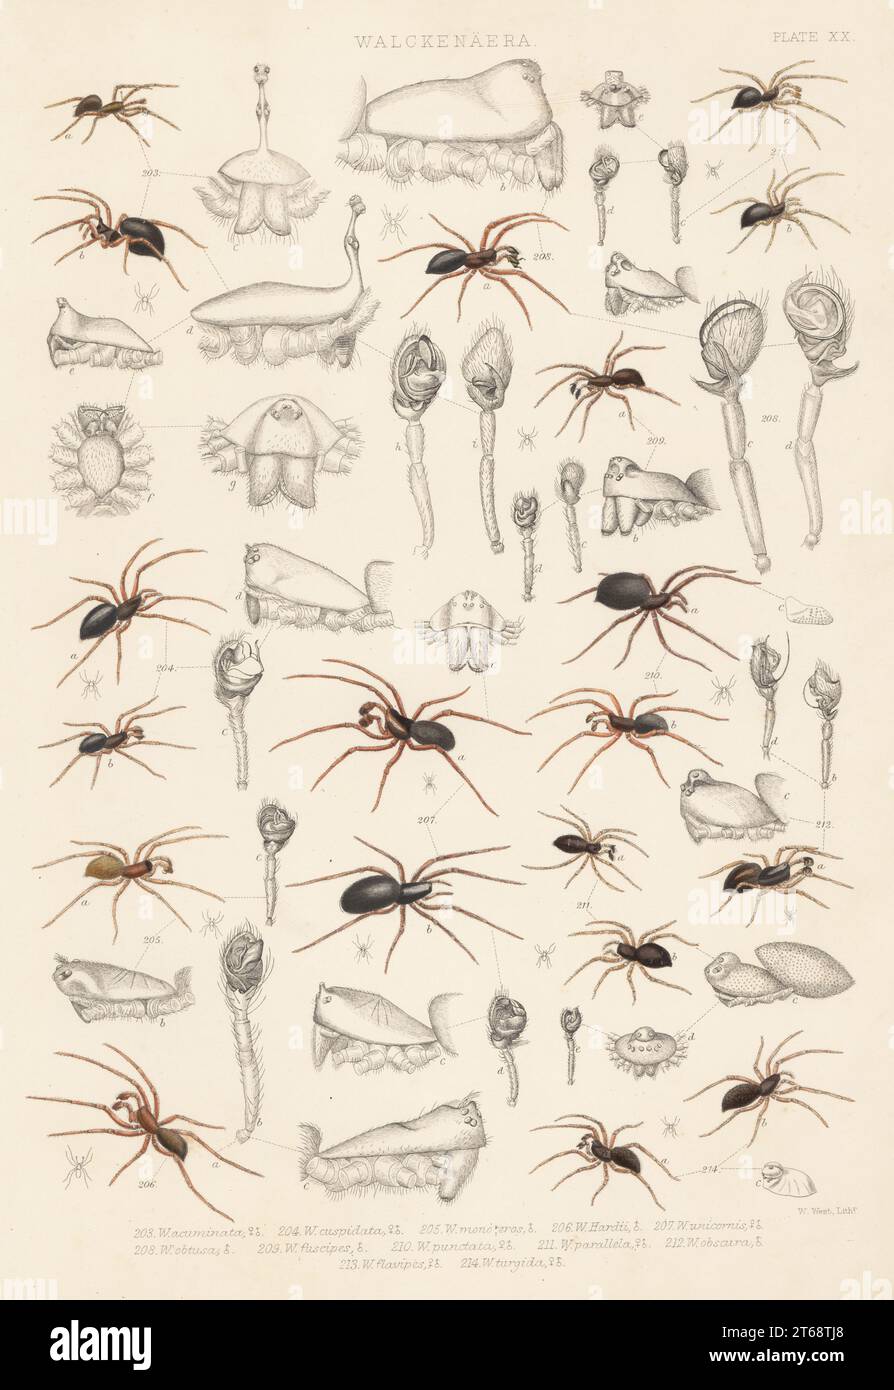 Dwarf spiders, Walckenaeria acuminata 203, Walckenaeria cuspidata 204, Walckenaeria monoceros 205, Leptothrix hardyi 206, Walckenaeria unicornis 207, Walckenaeria obtusa 208, Monocephalus fuscipes 209, Lophomma punctatum 210, Pelecopsis parallela 211, Cnephalocotes obscurus 212, Entelecara flavipes 213, and sheet weaver spider, Thyreosthenius parasiticus 214. Handcoloured lithograph by W. West from John Blackwalls A History of the Spiders of Great Britain and Ireland, Ray Society, London, 1861. Stock Photo